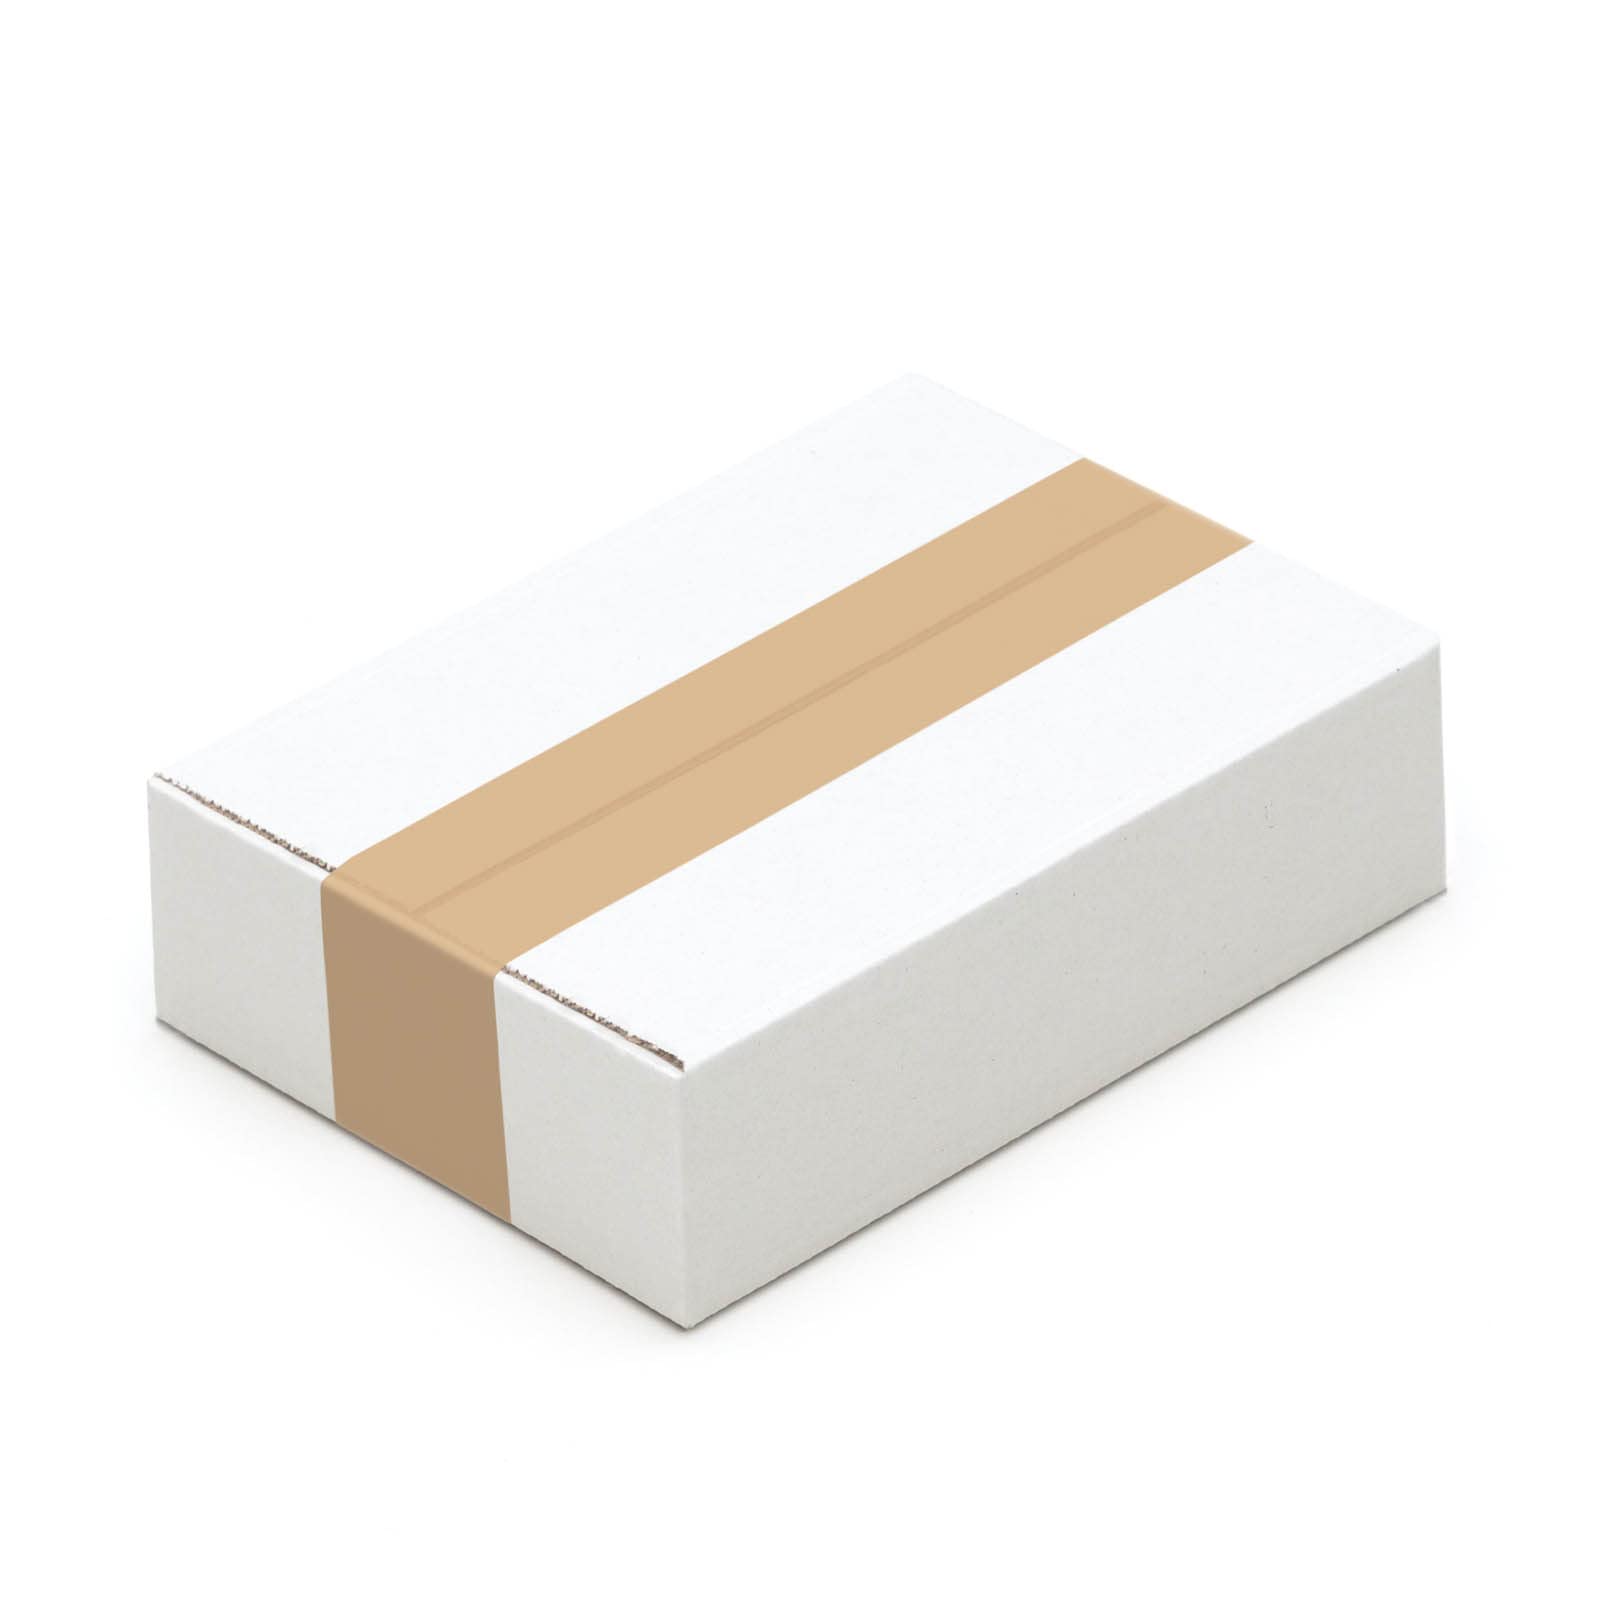 KK Verpackungen® Faltkartons | 150 Stück, 215 x 150 x 55 mm, Versandkartons in Weiß nach Fefco 0201 | Kartons für den Paketversand